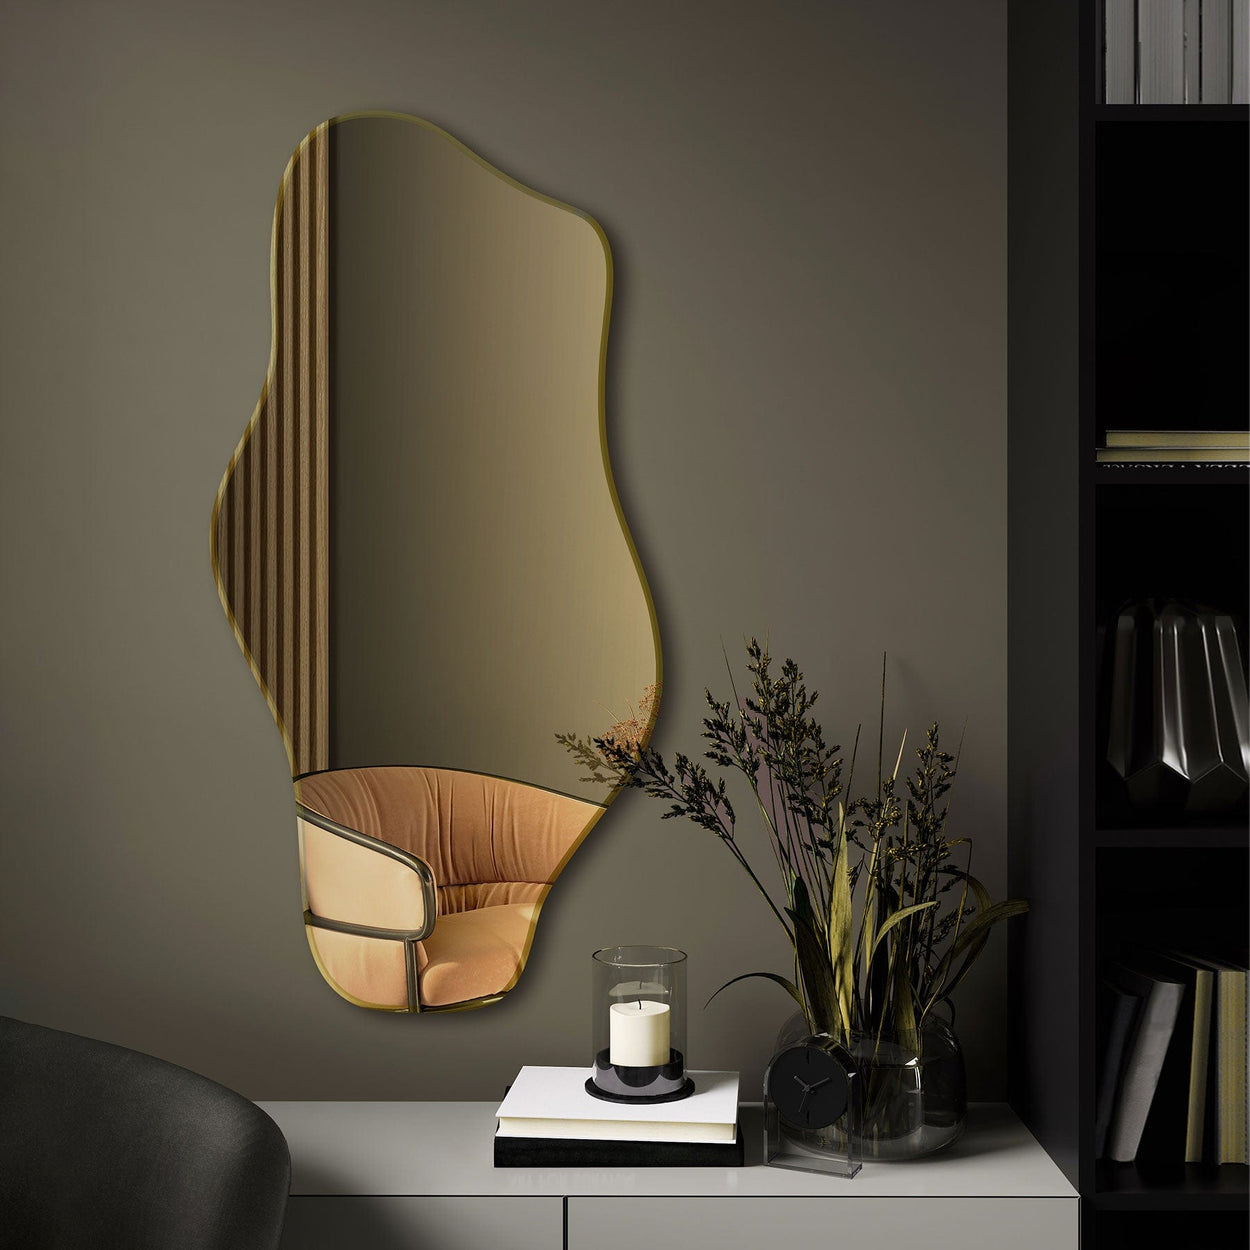 Decoration with Incado mirrors